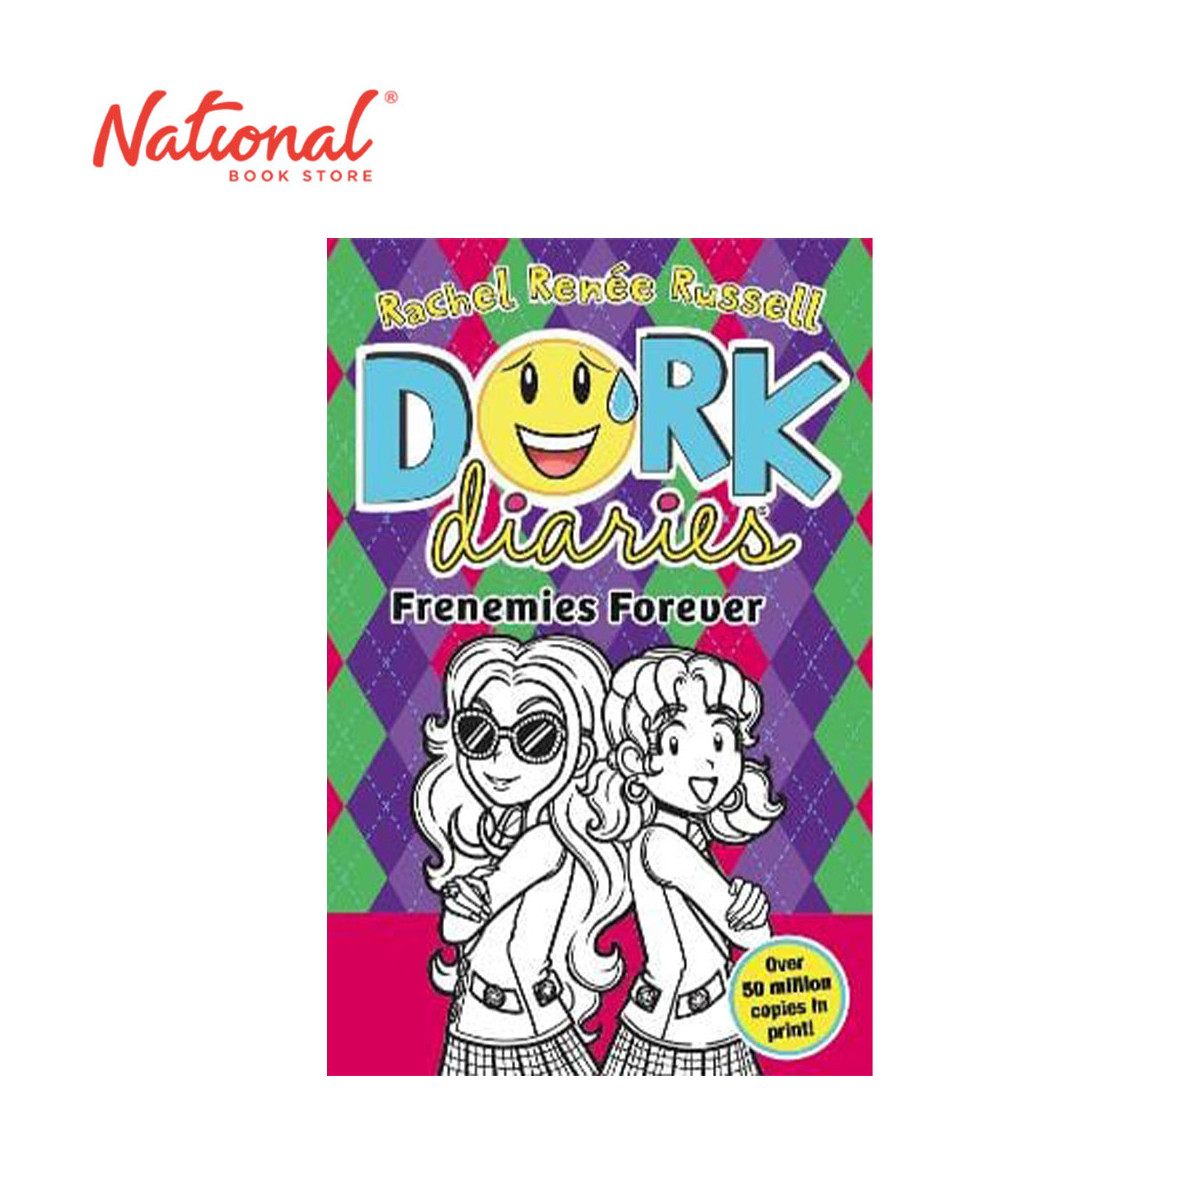 Dork Diaries 11: Frenemies Forever UK New Cover By Rachel Renee Russell - Trade Paperback